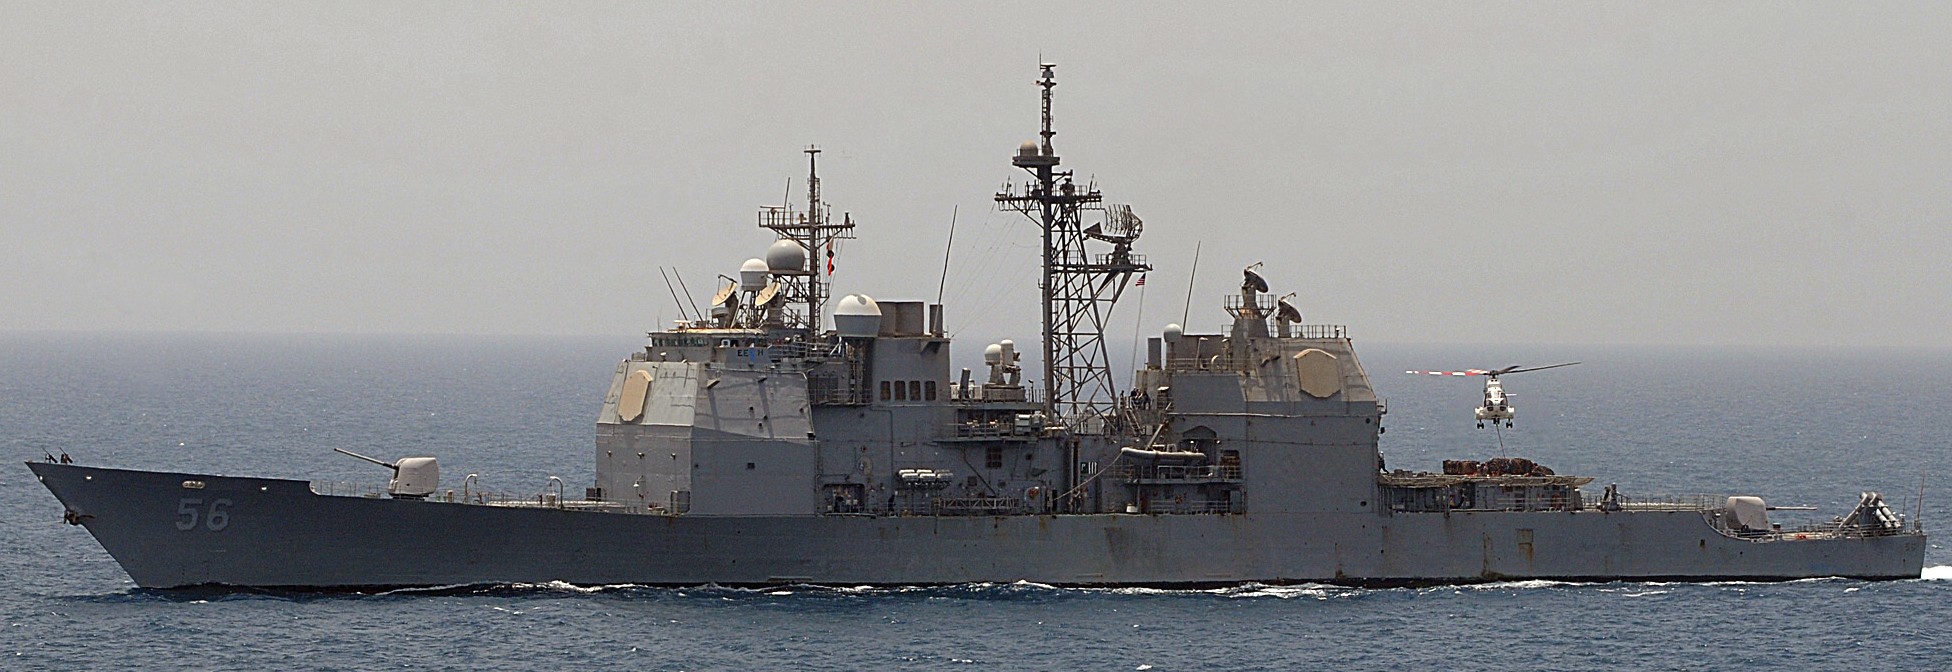 cg-56 uss san jacinto ticonderoga class guided missile cruiser aegis us navy 35